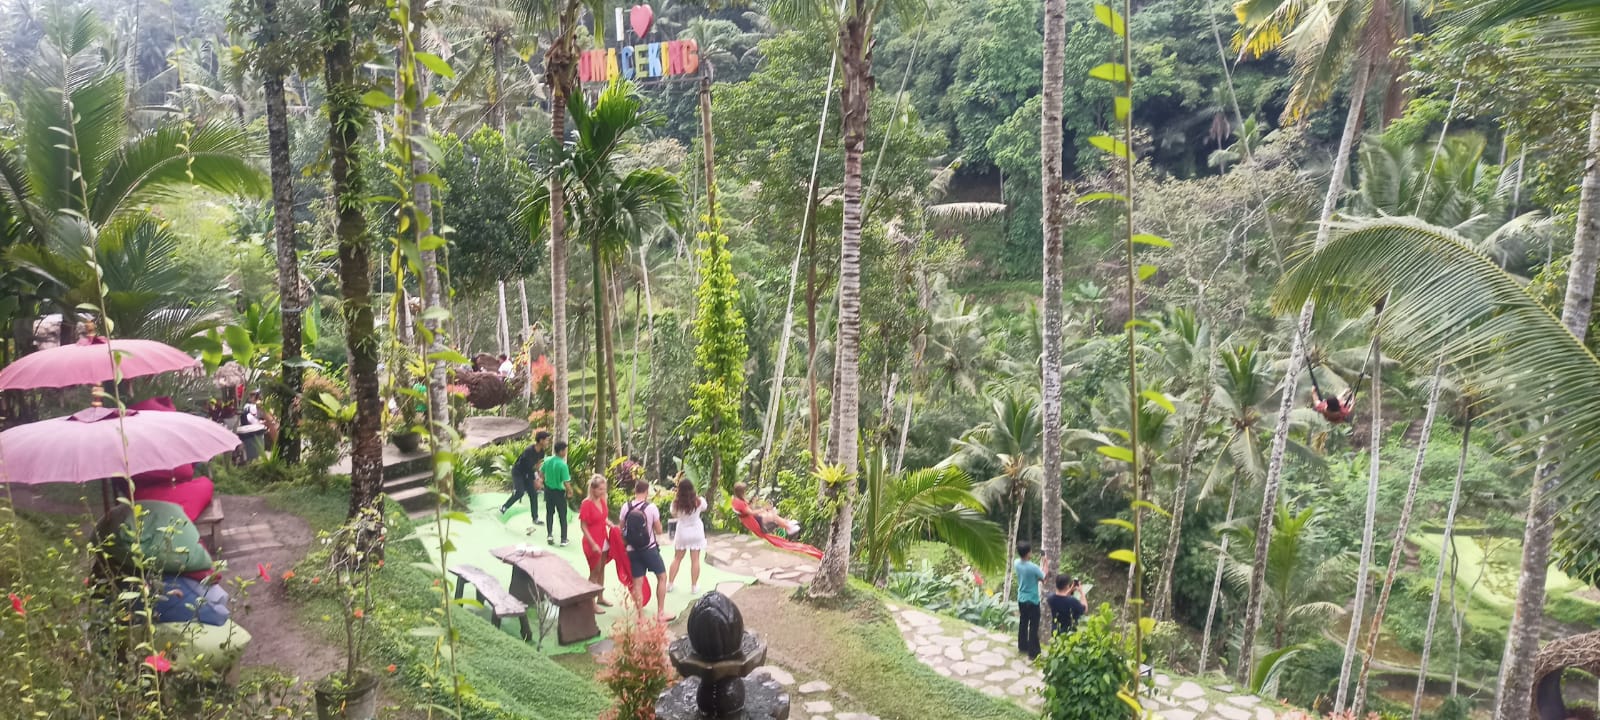 Belajar Budaya Sambil Menikmati Keindahan Alam Wisata Ubud Bali Uma Ceking